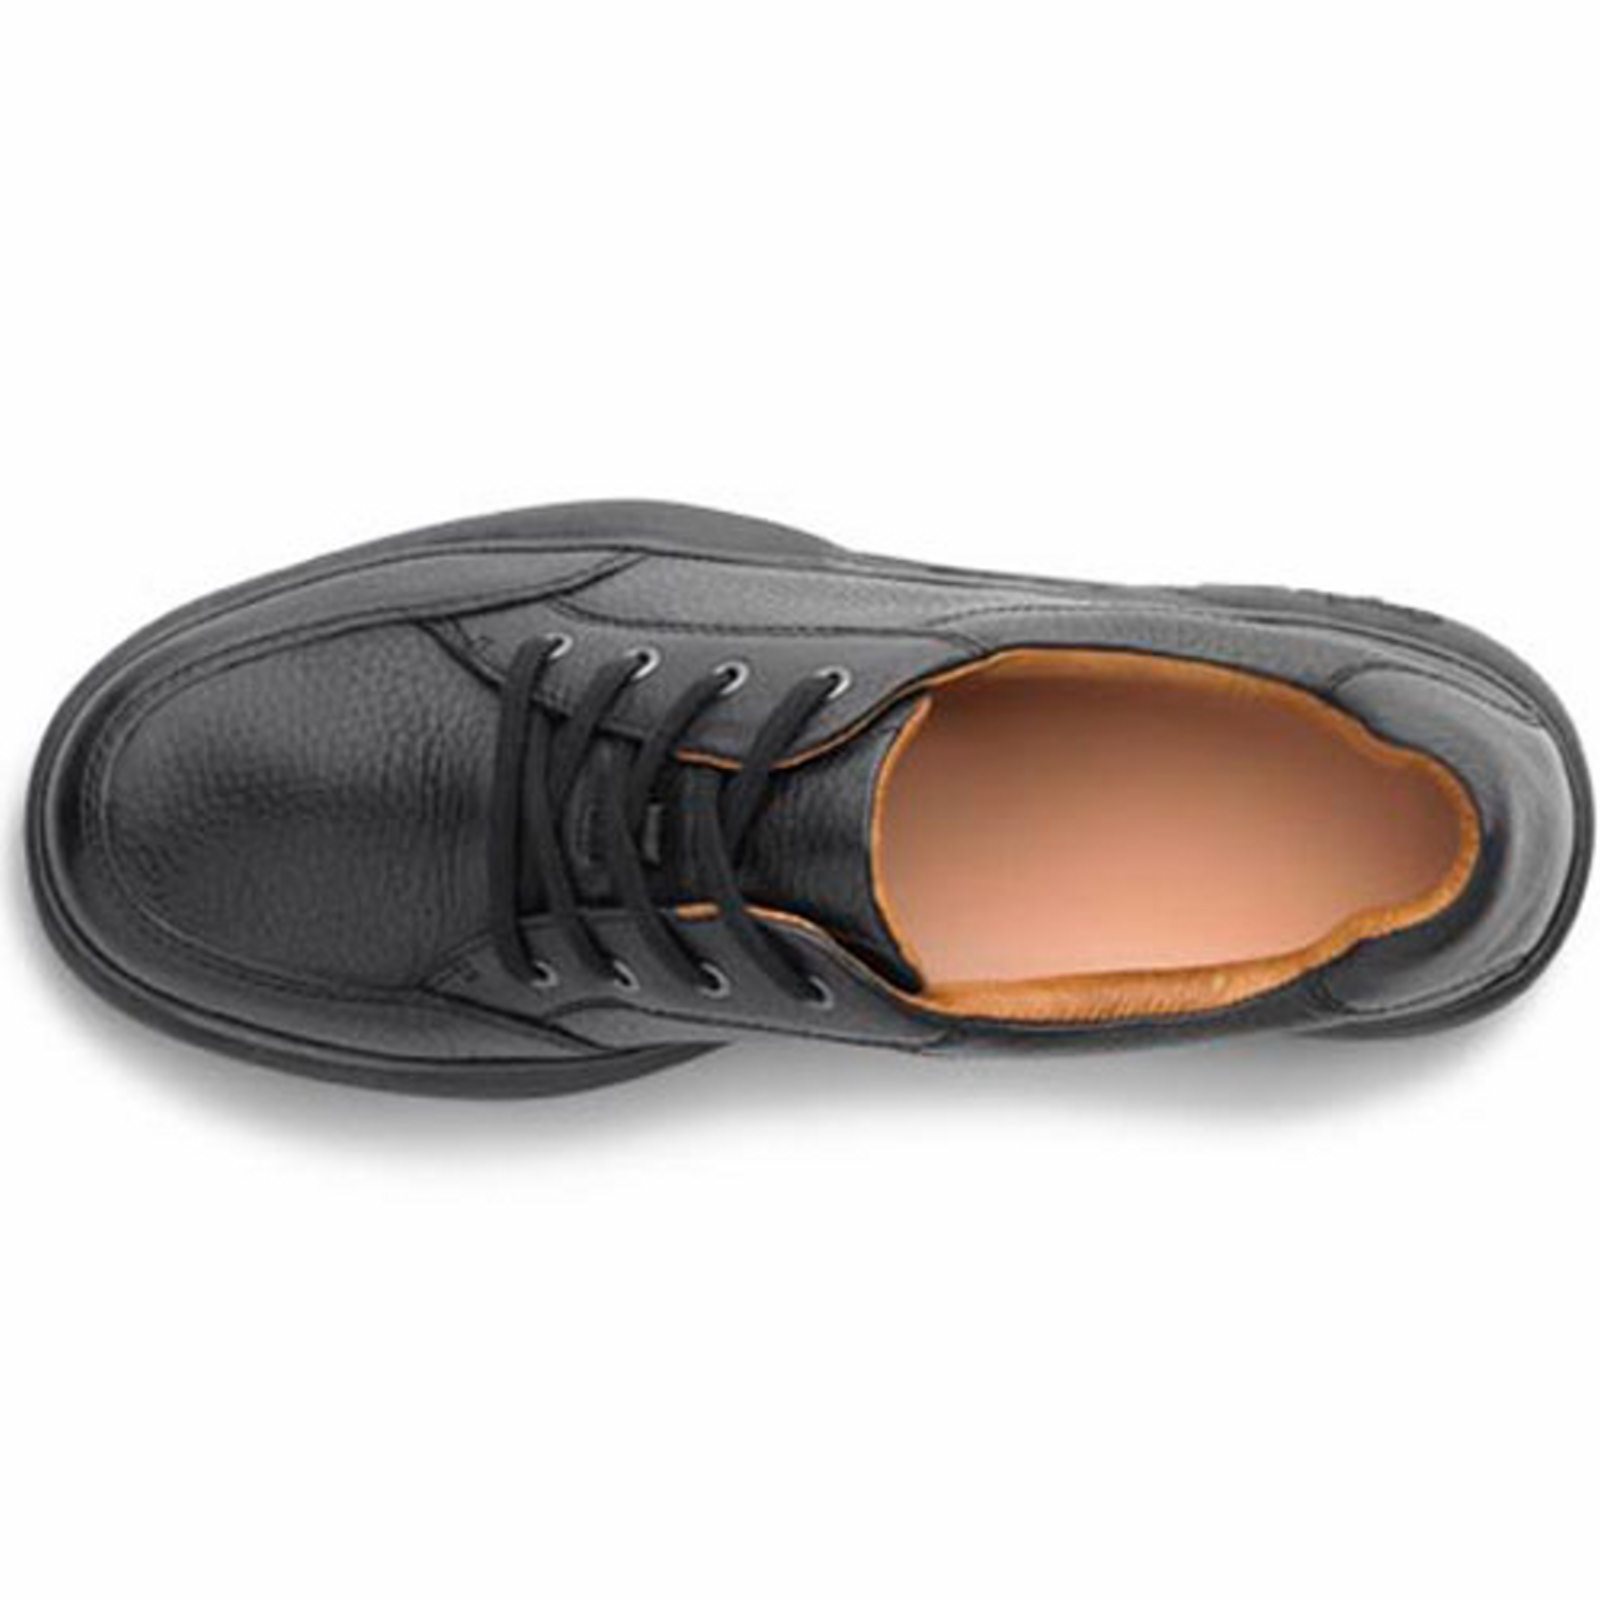 Dr. Comfort Justin Men's Casual Shoe: 9.5 Medium (B/D) Chestnut Suede Lace - image 4 of 4